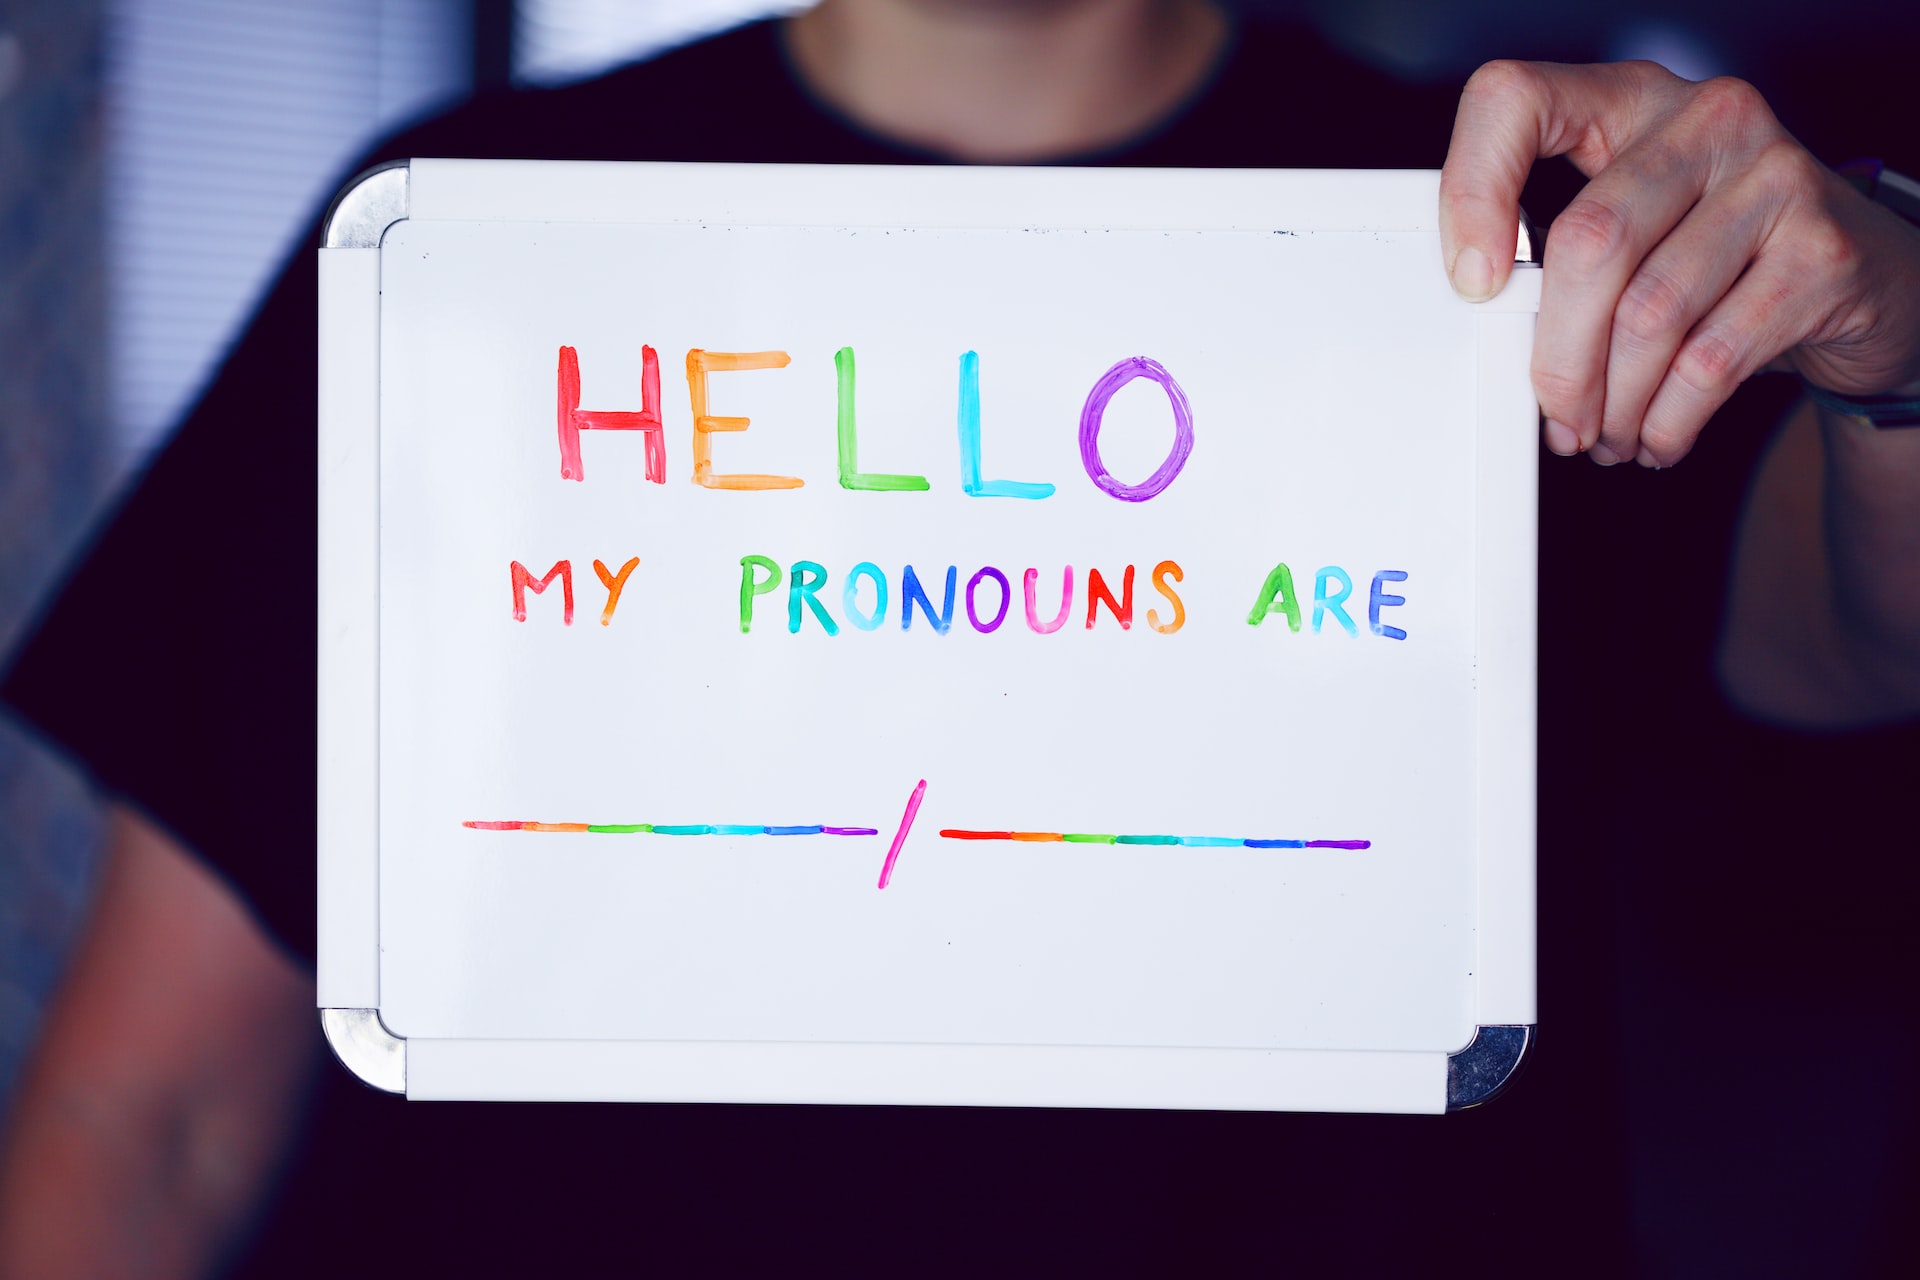 Hello my pronouns are...